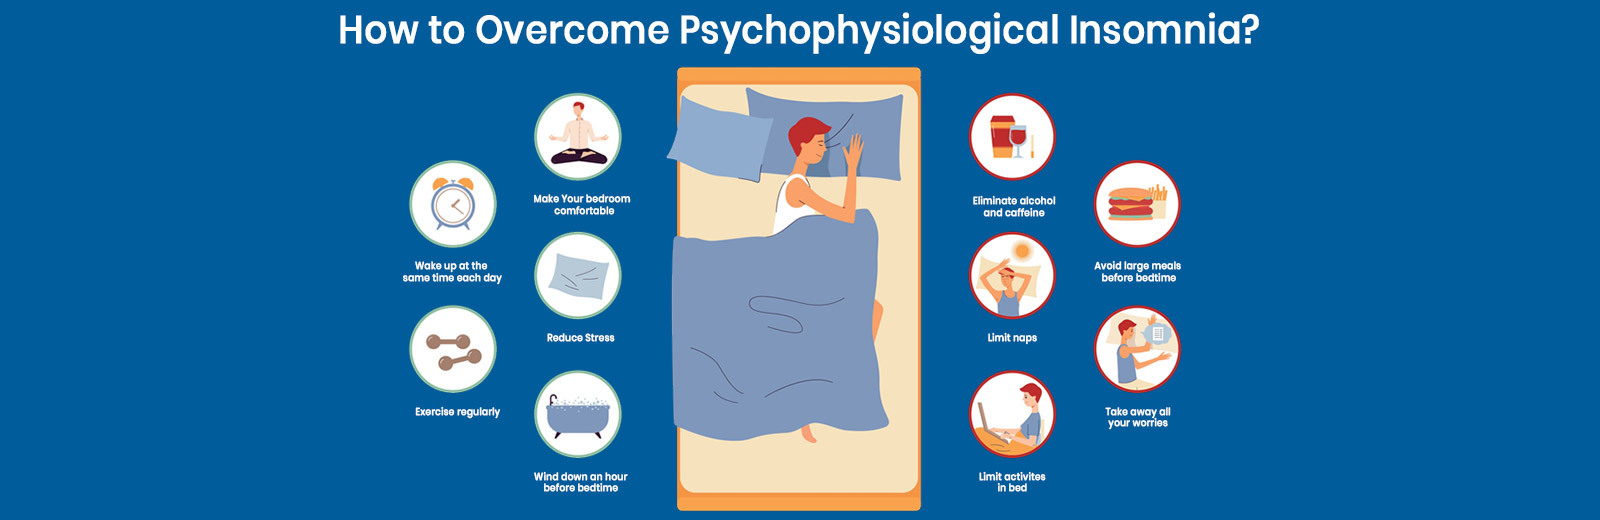 overcome psychophysiological insomnia